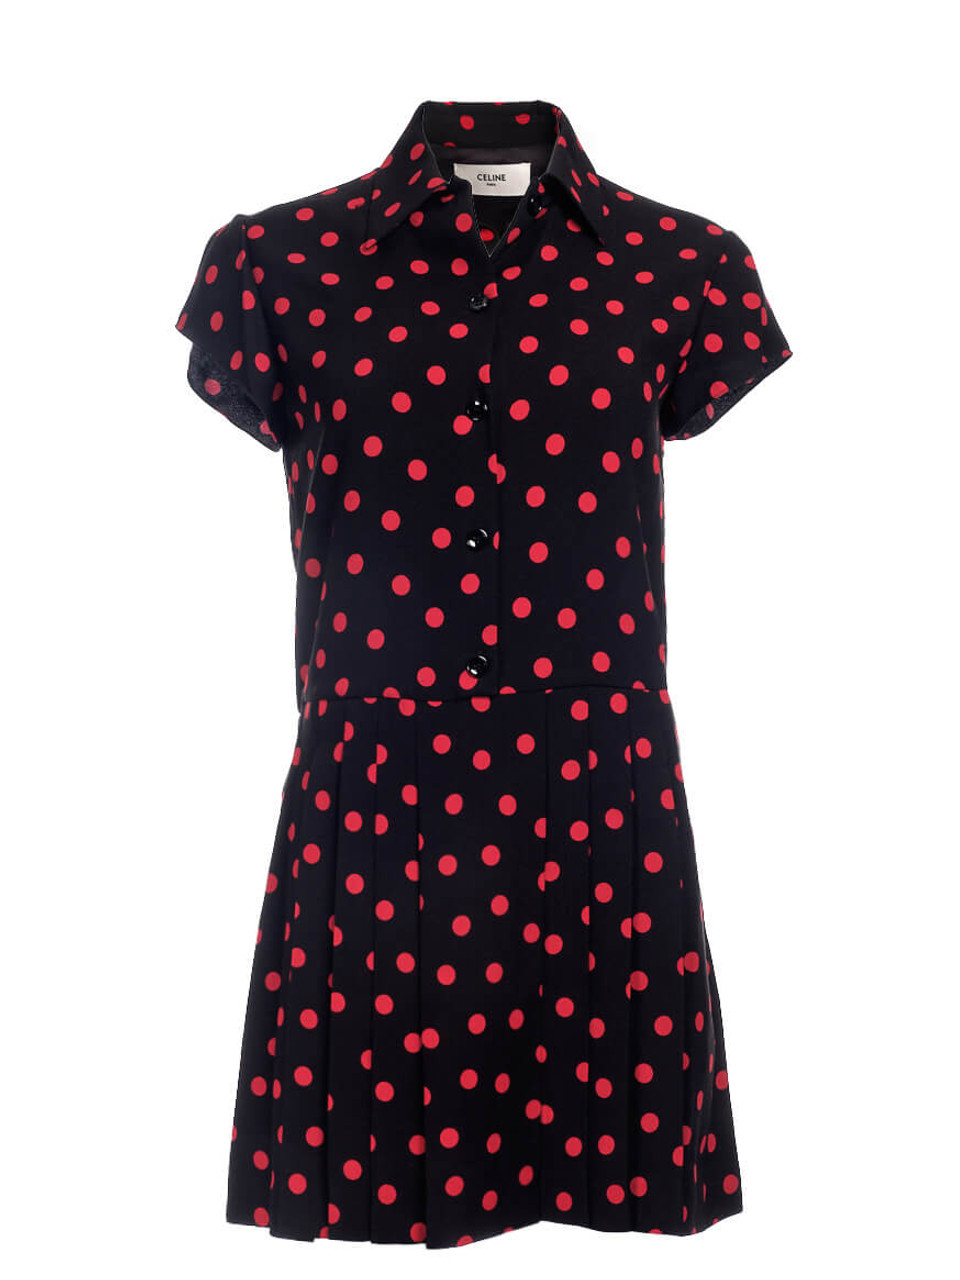 Women Celine Midi Dress with Folksy Polka Dot Print - Black Size S UK 8 US 4 FR 36